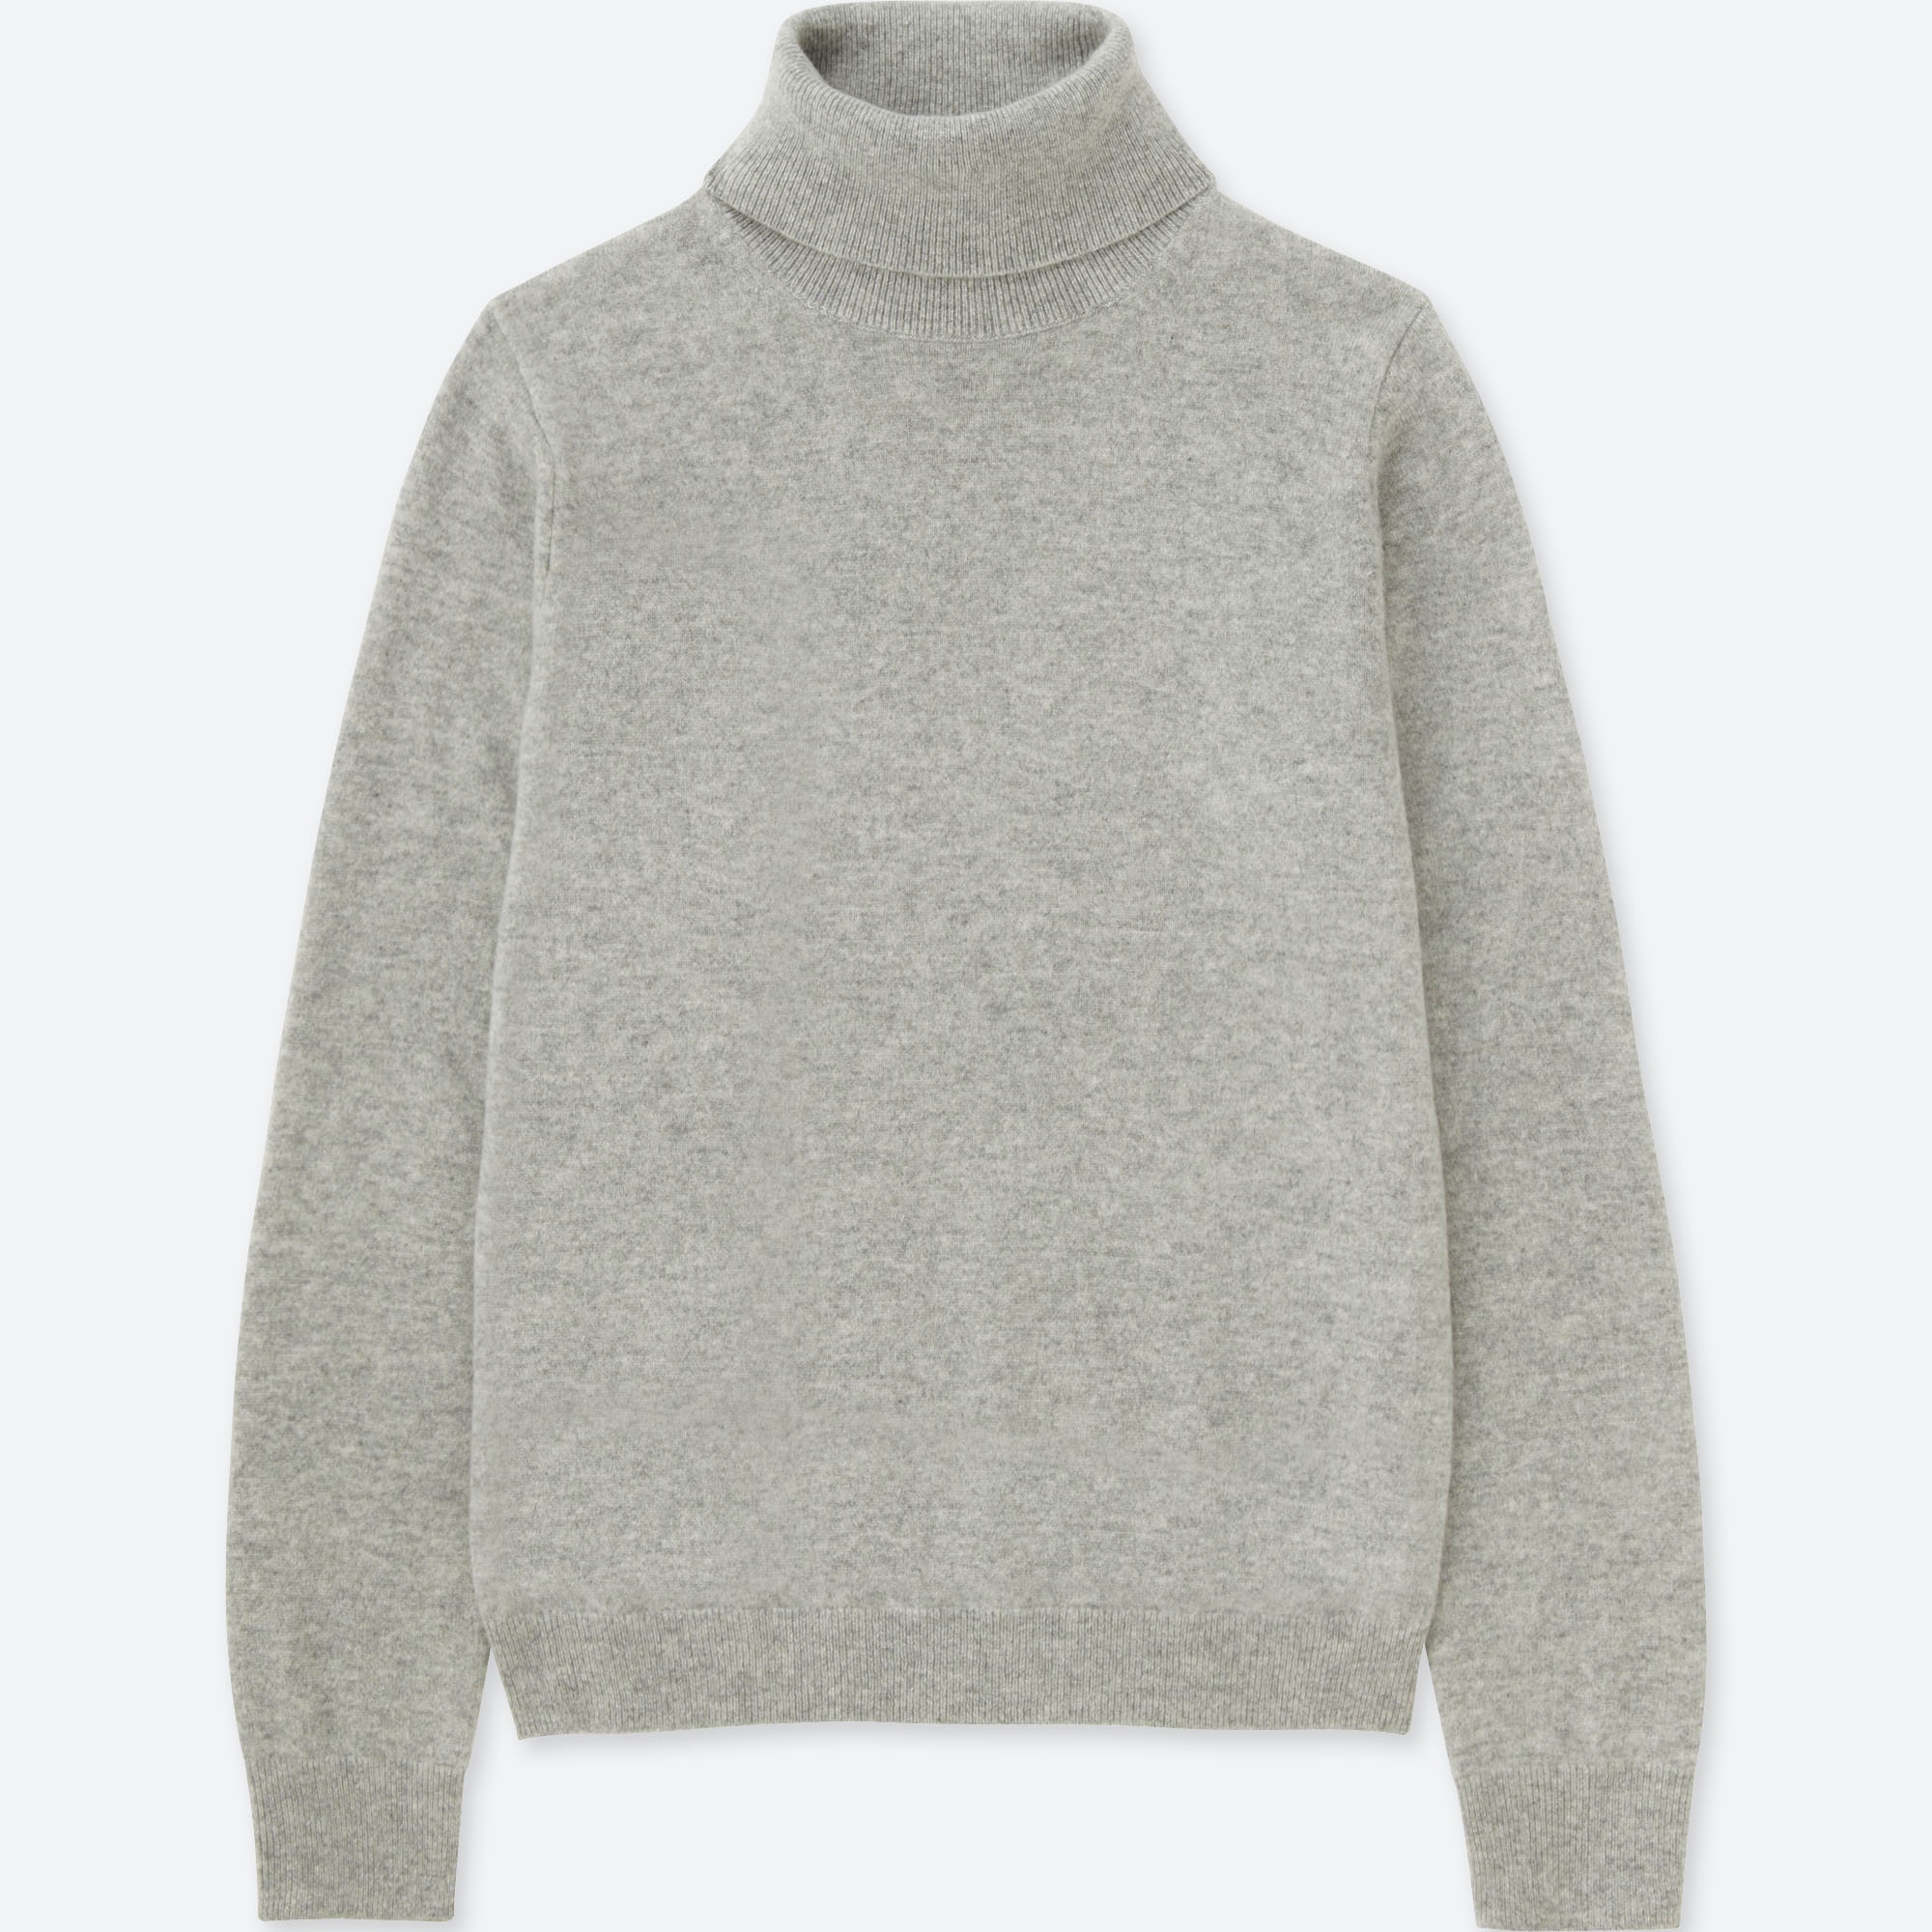 In Cashmere Turtleneck Cashmere Sweater Heather Fog XL NWT $238 